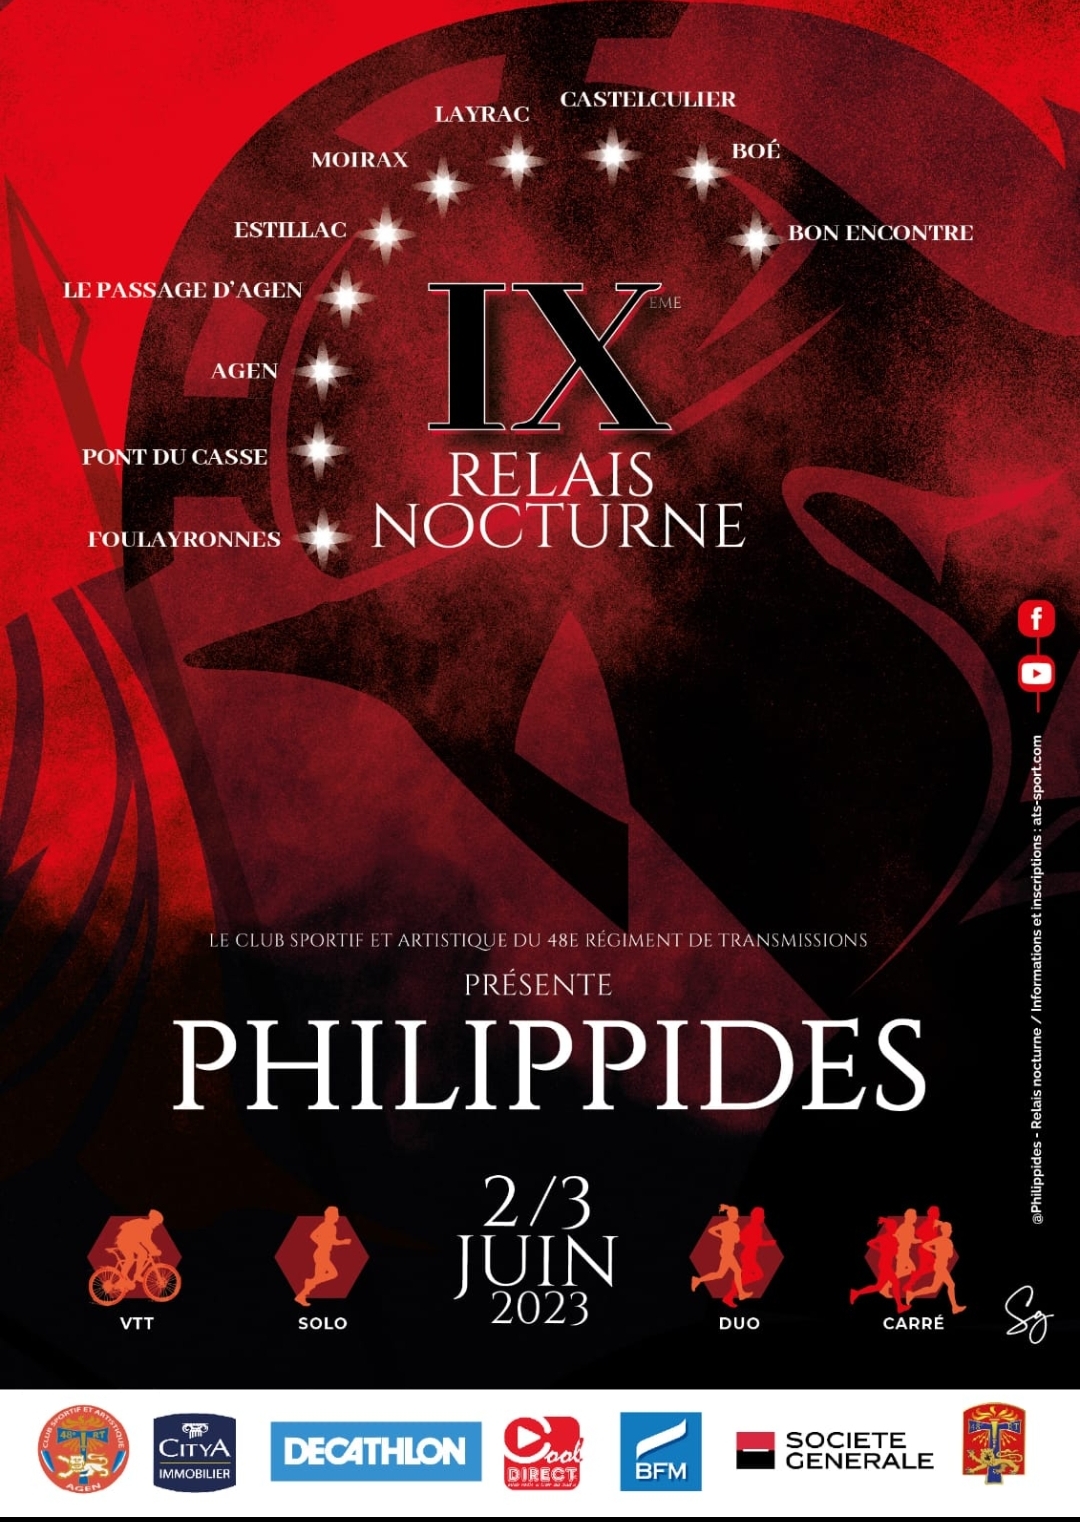 Philippides Relais Nocturne 